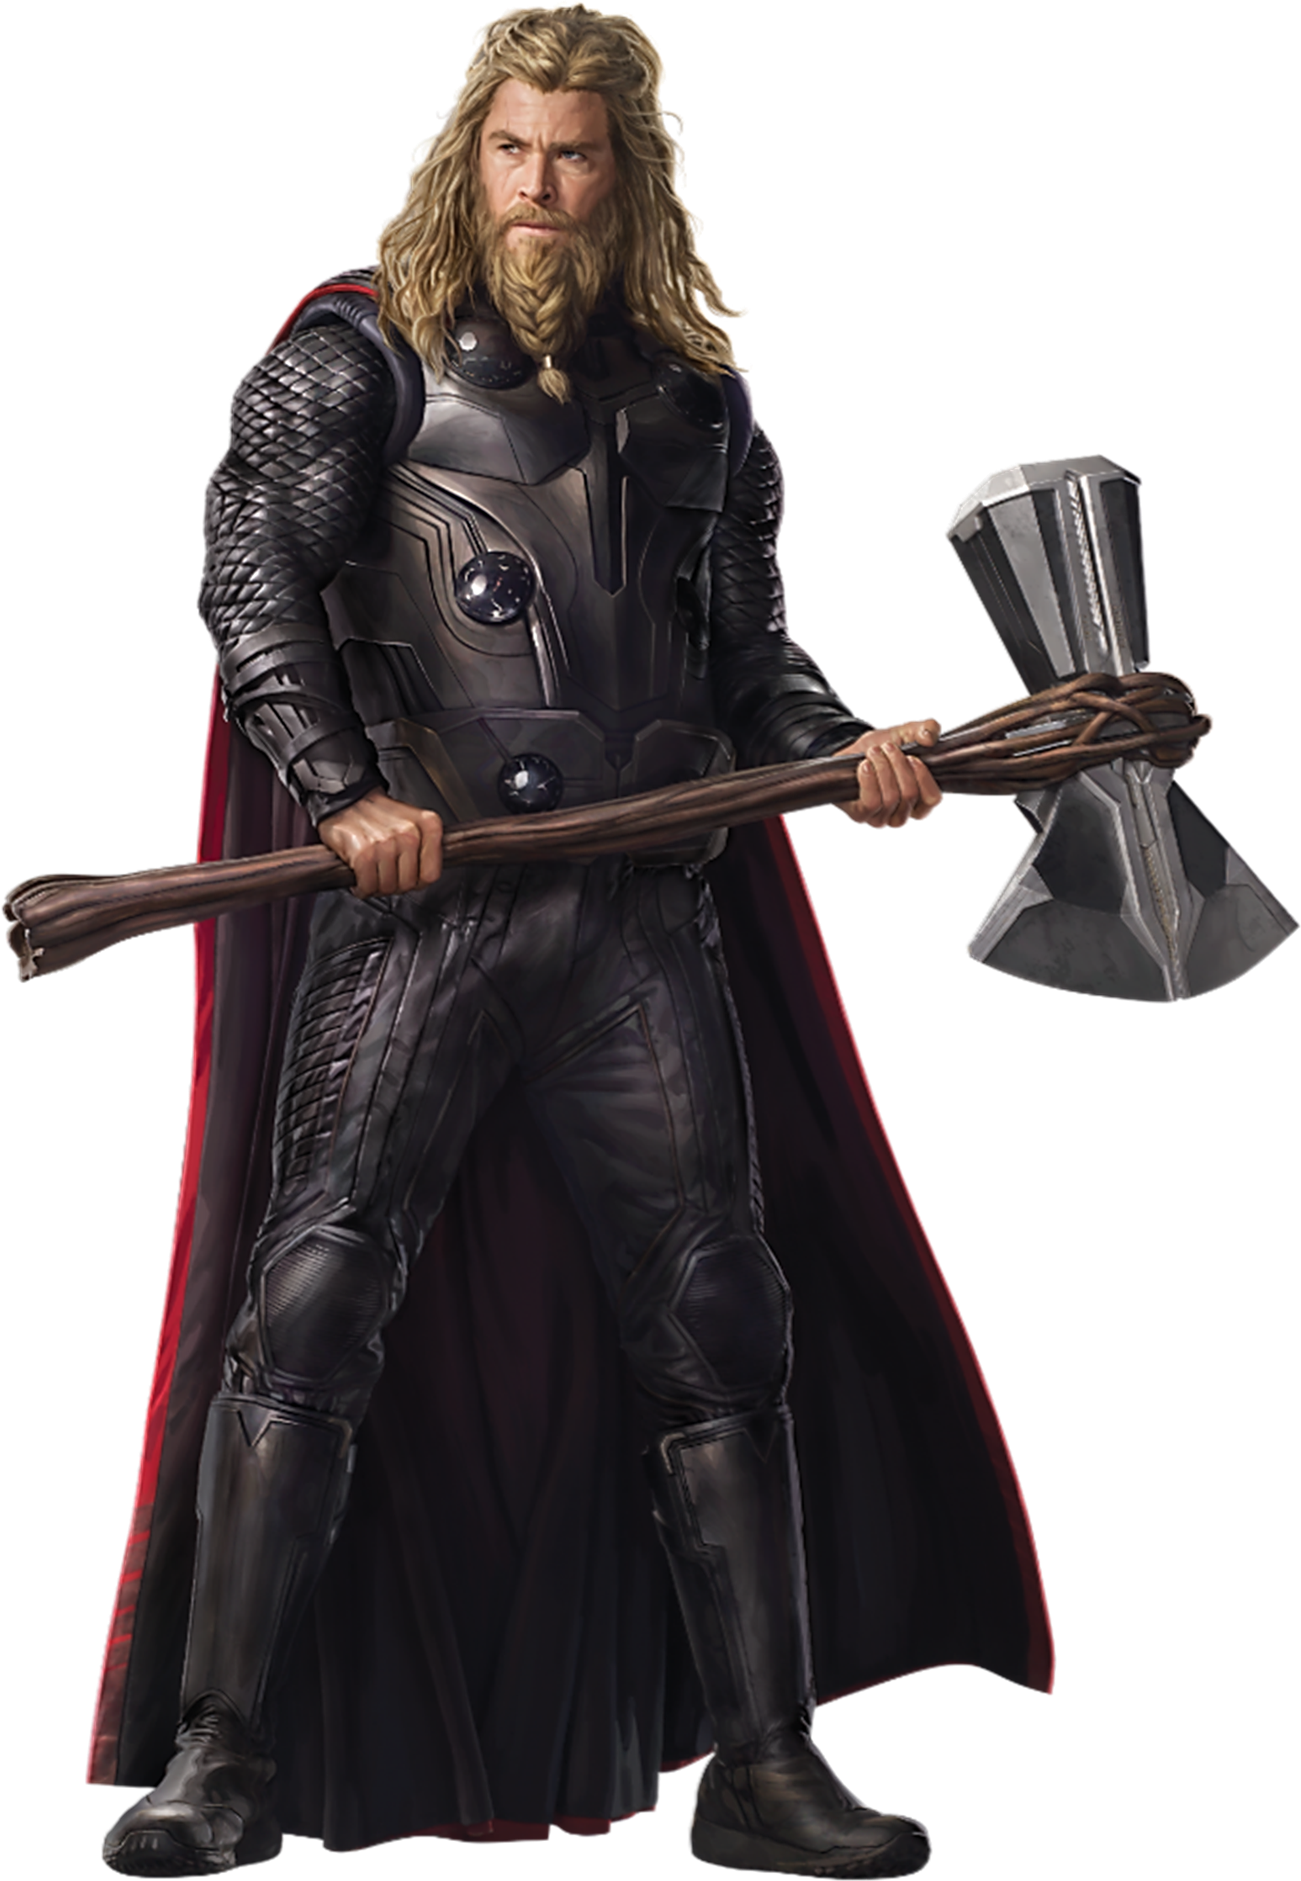 Thor (Marvel Cinematic Universe) - VS Profiles/Debates Wiki - Quora